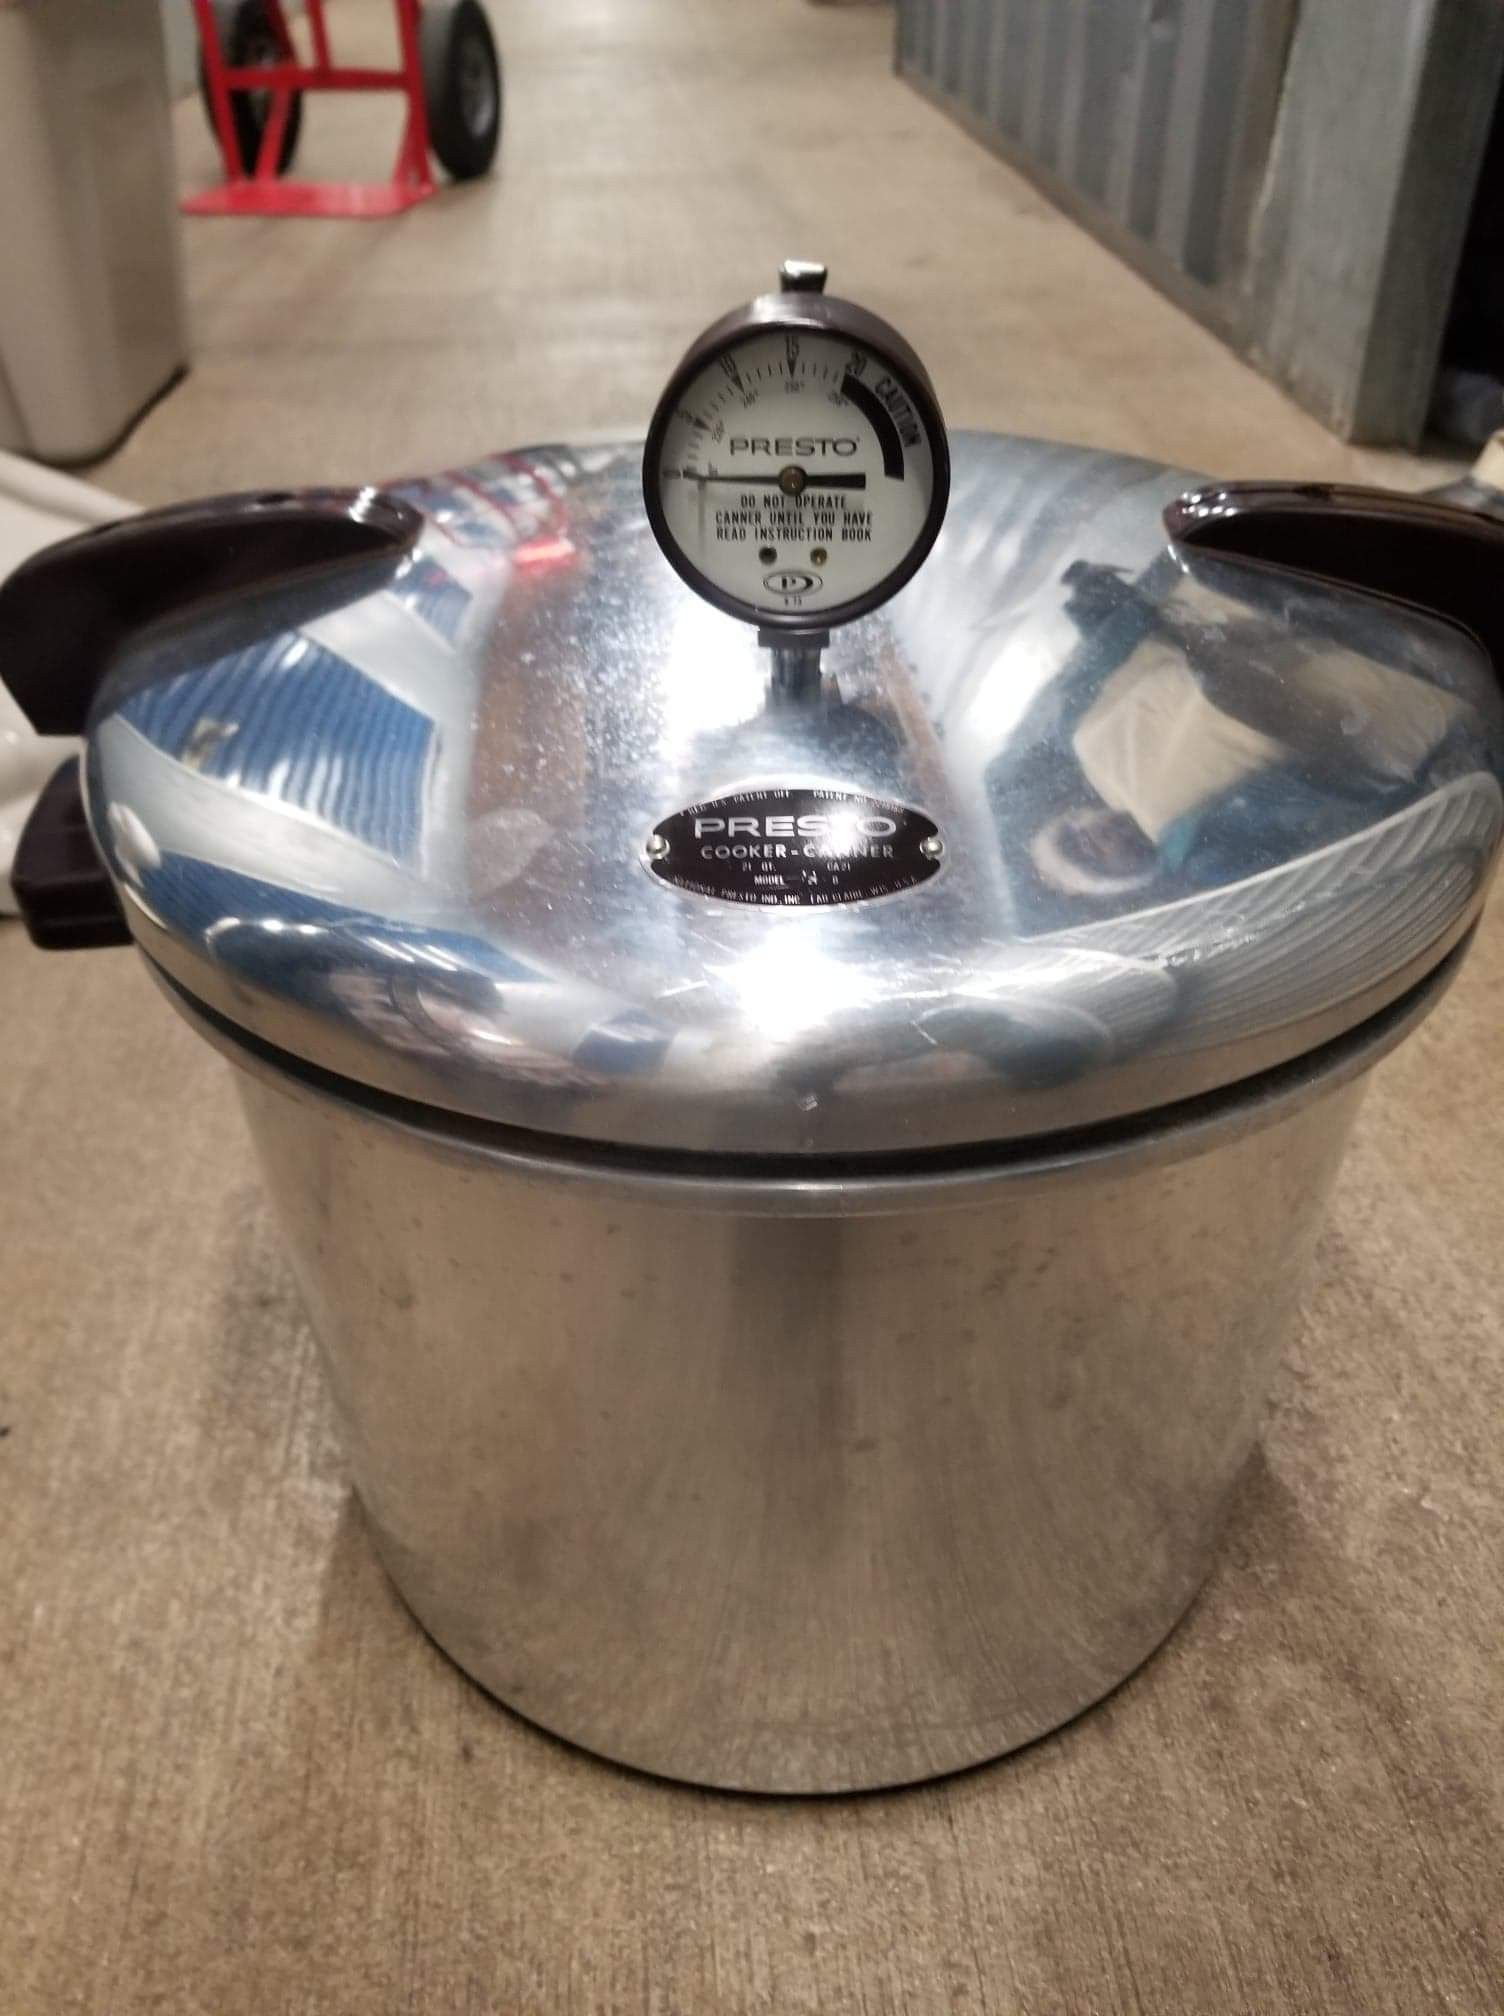 Presto canning pressure cooker